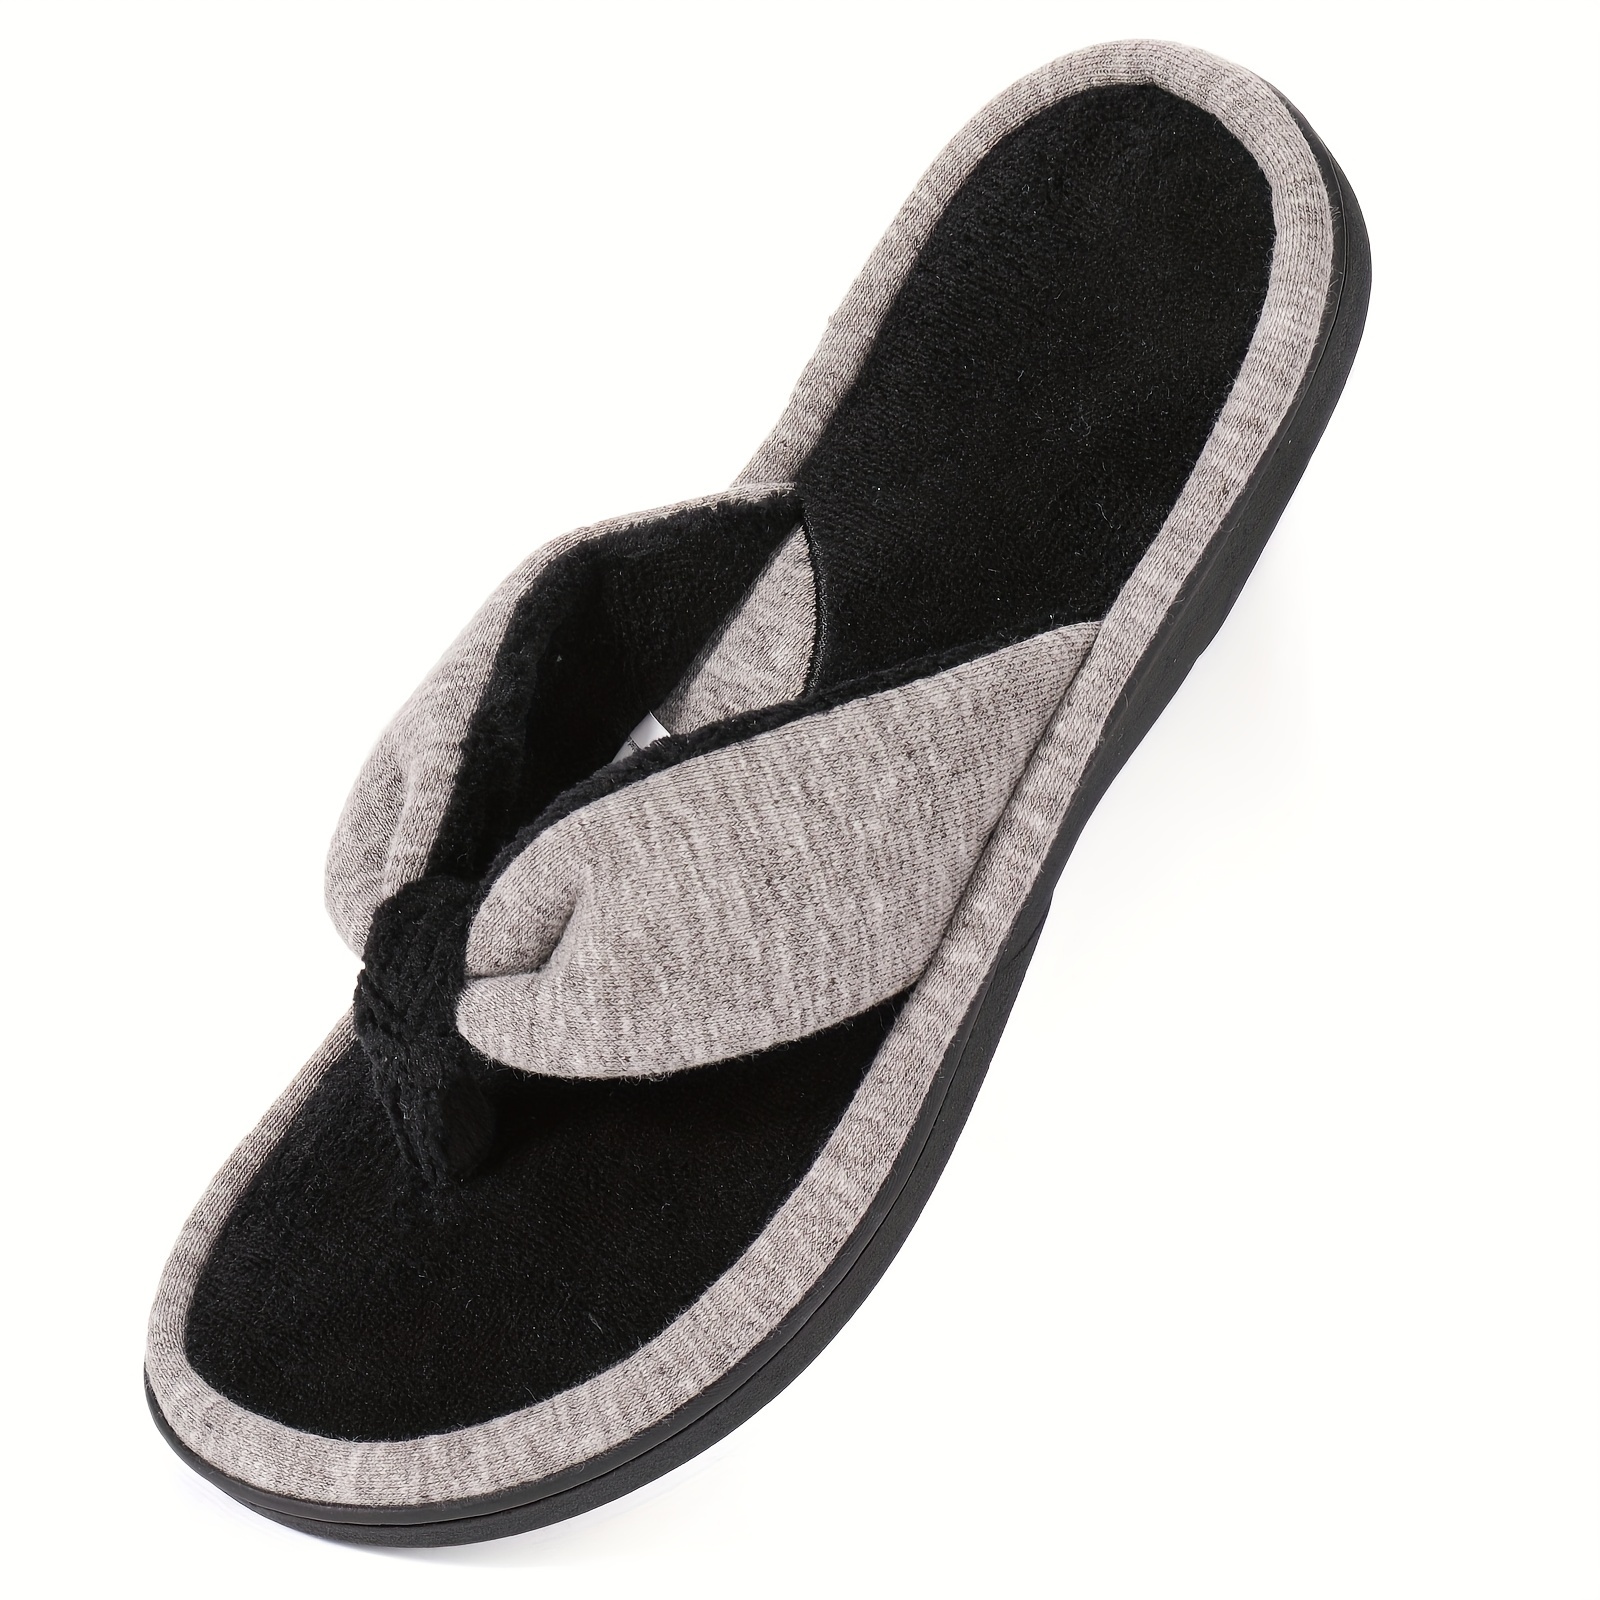 Buy Women's Memory Foam Thong Flip Flop Sandals (6 US) at